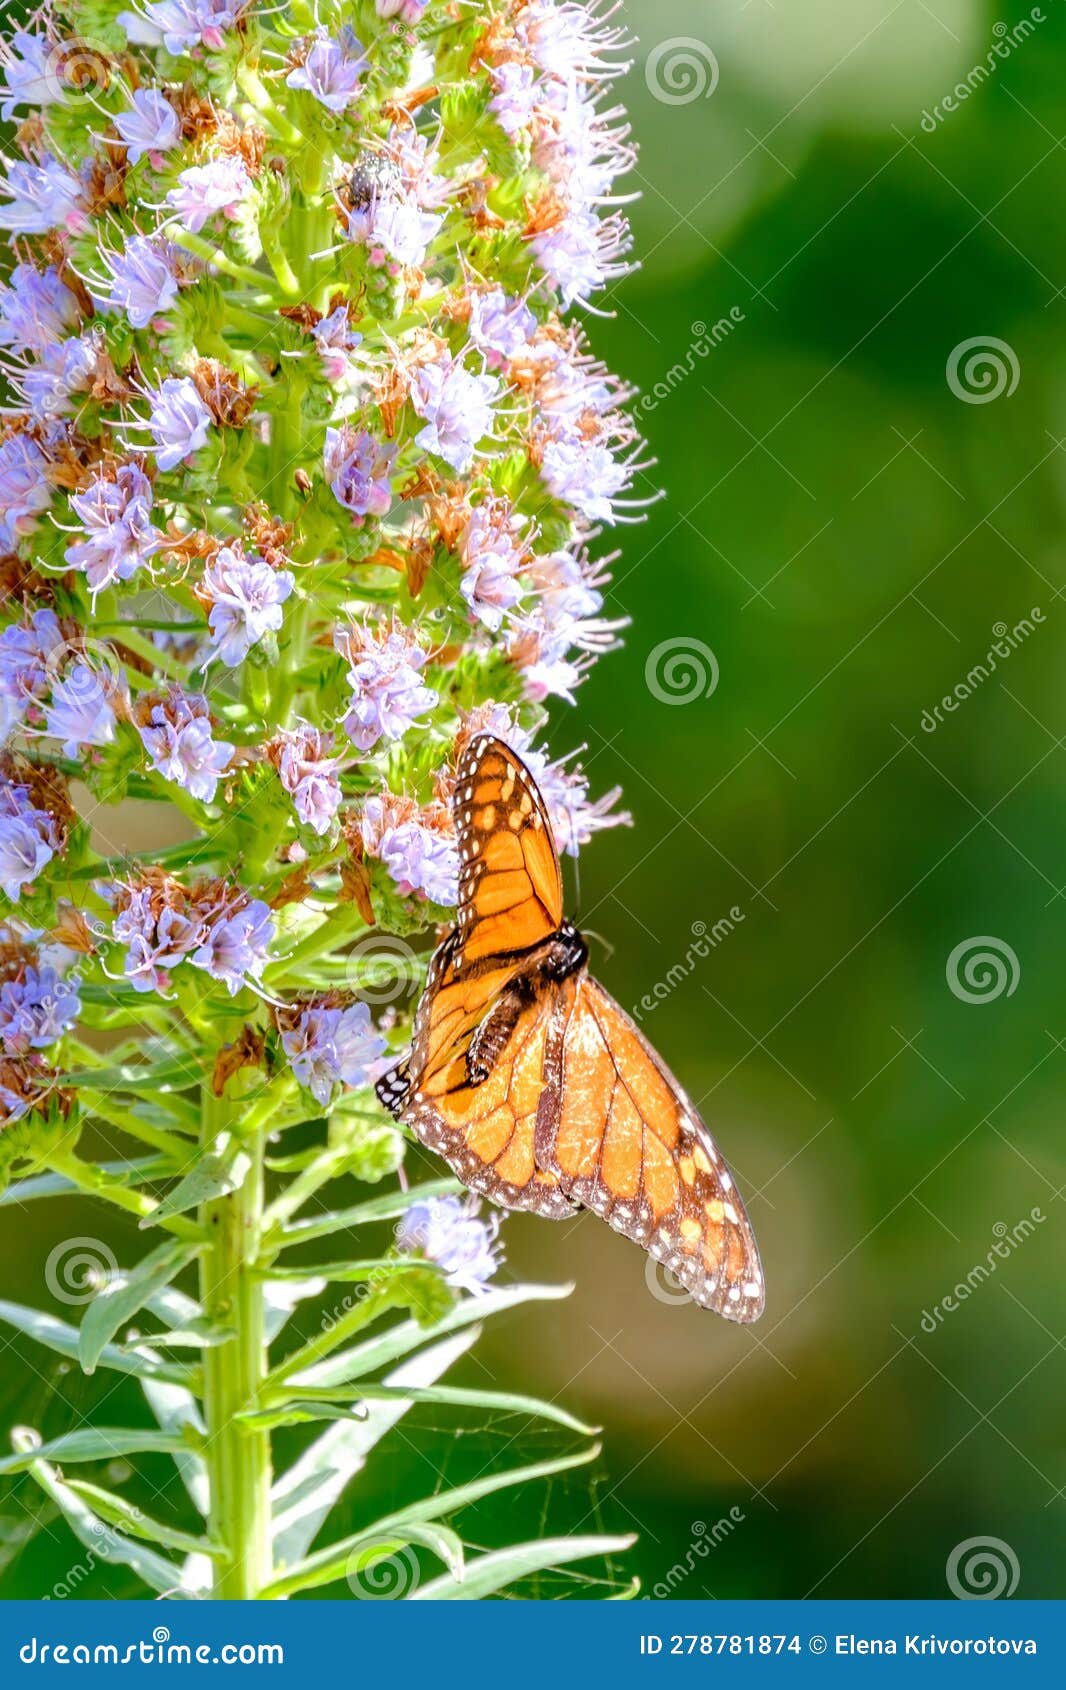 monarch butterfly (danaus plexippus) standing on the blooming oplant echium virescens i